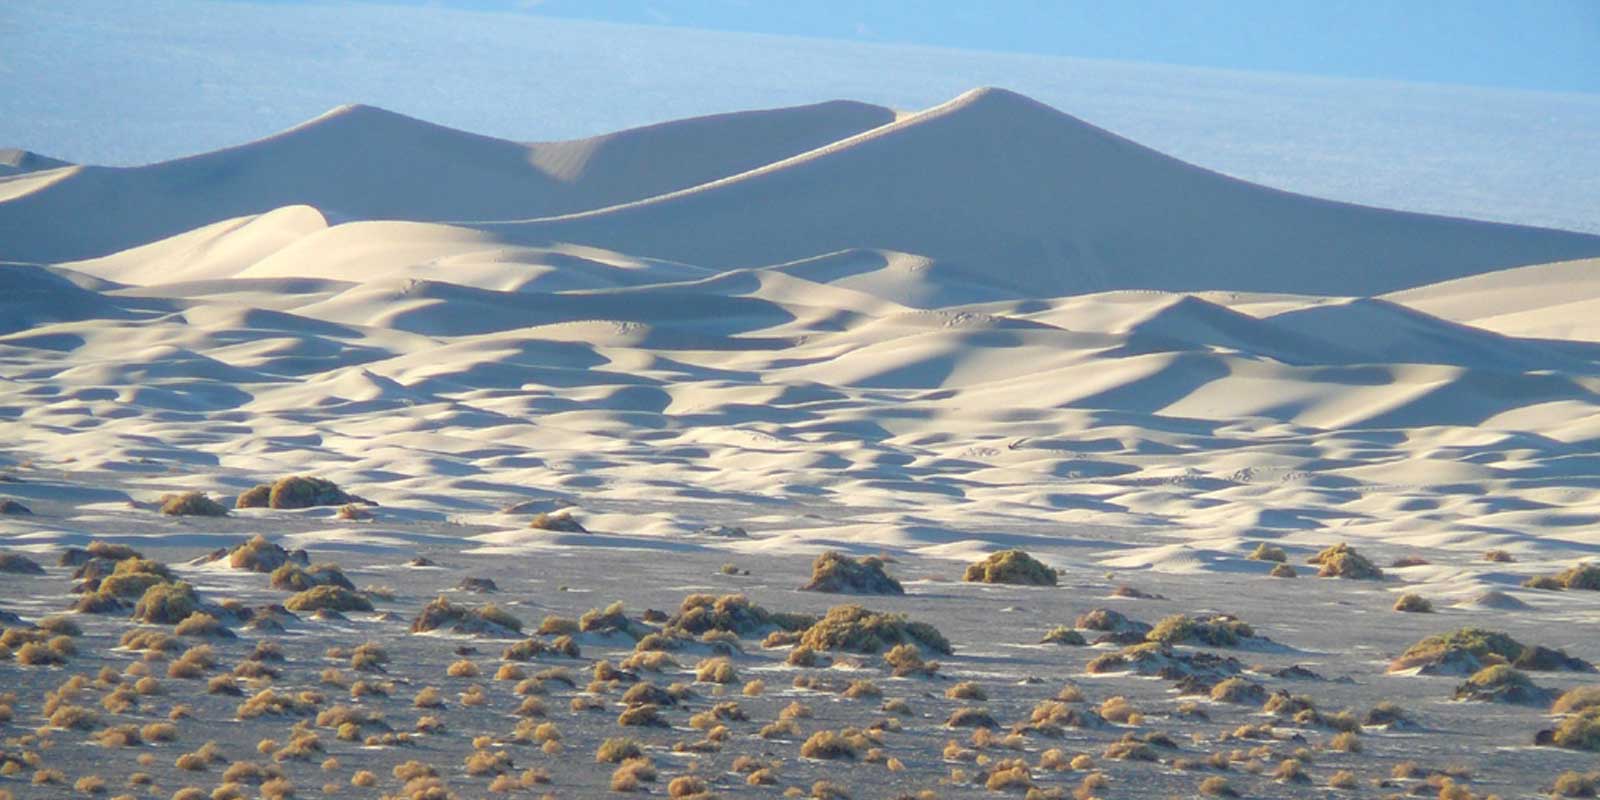 Landscape photo of sand dunes at Death Valley National Park